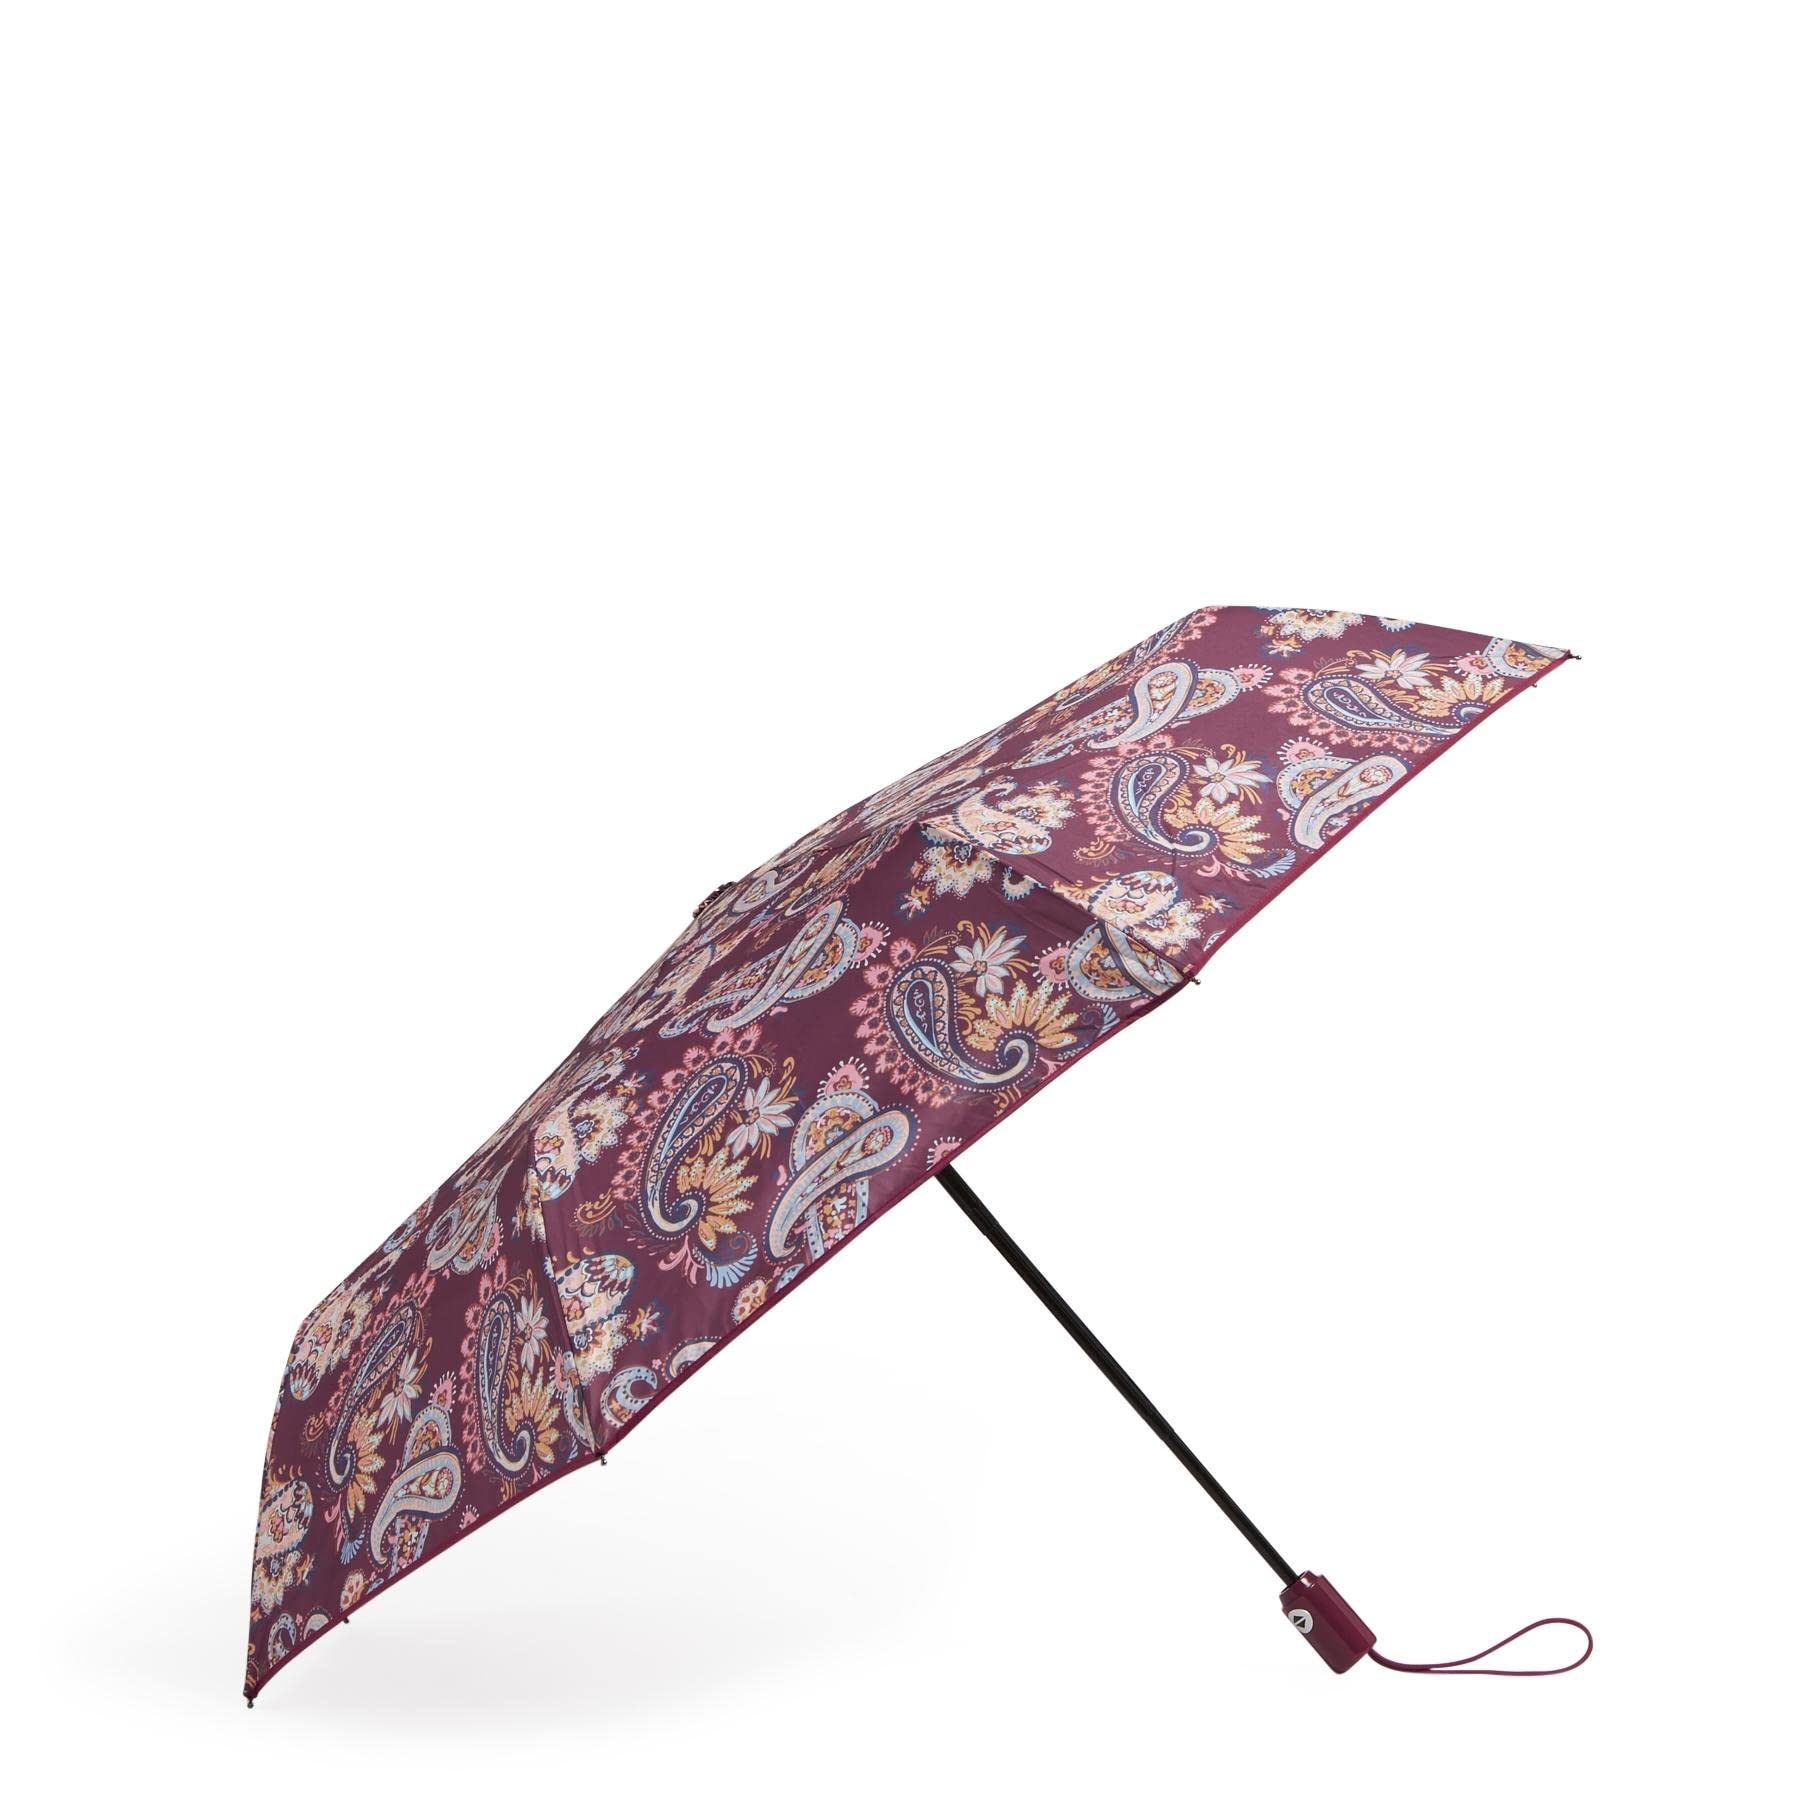 Vera Bradley Women's Umbrella